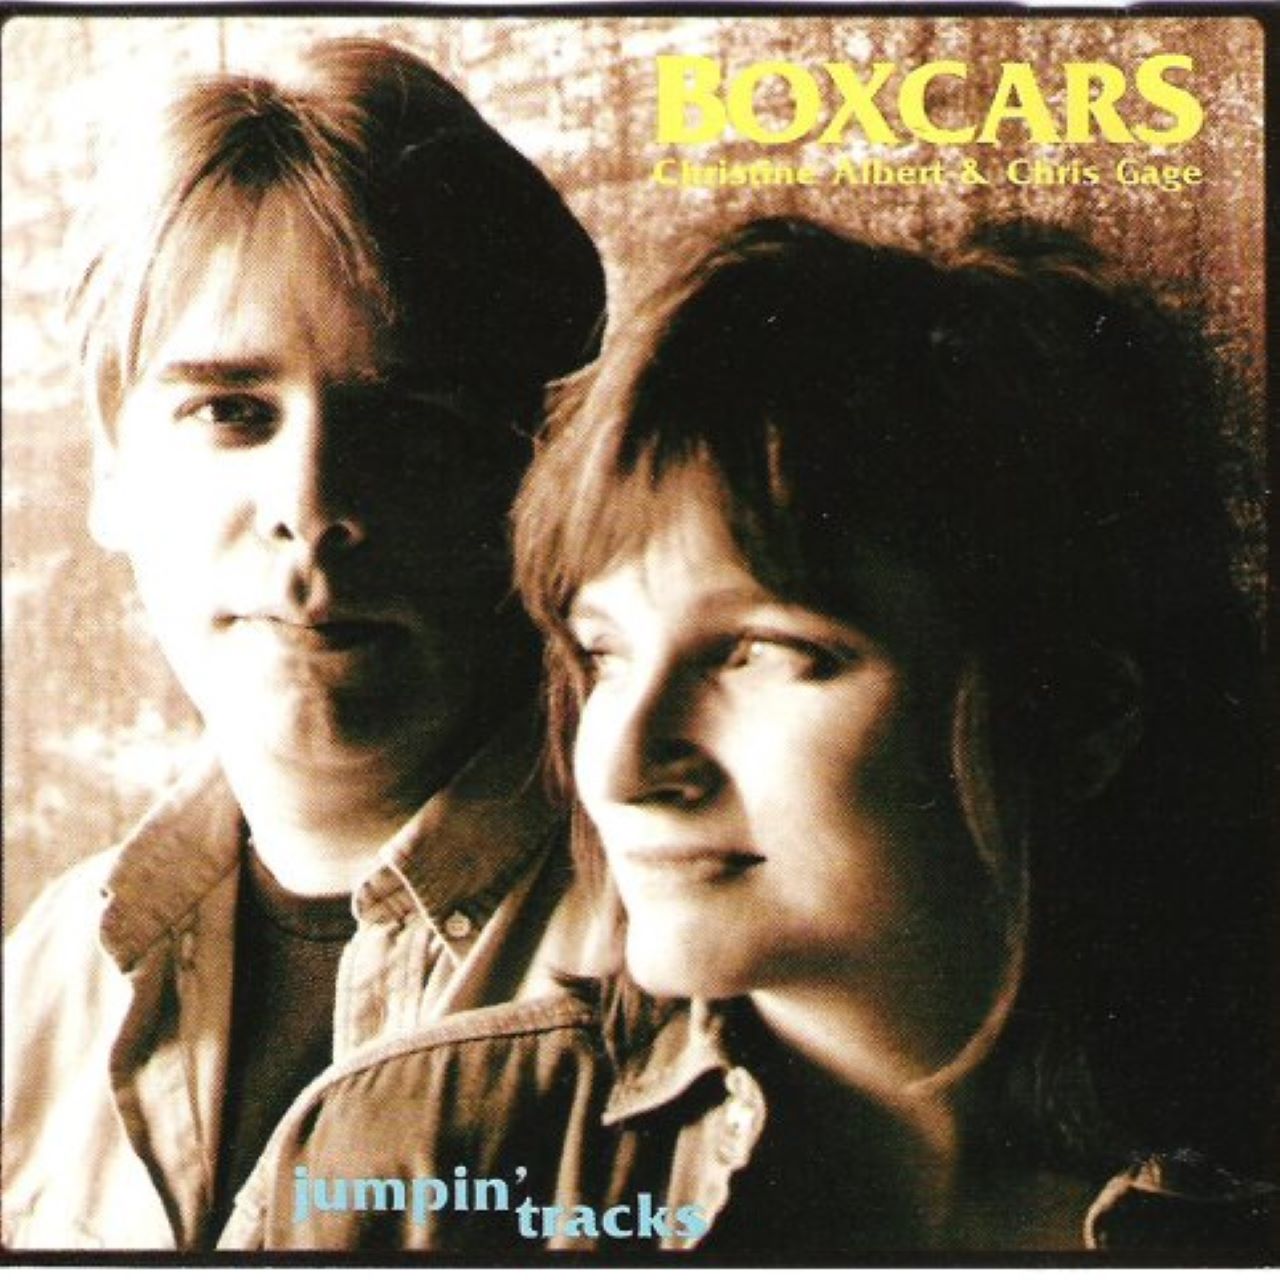 Boxcars - Jumpin' Tracks cover album